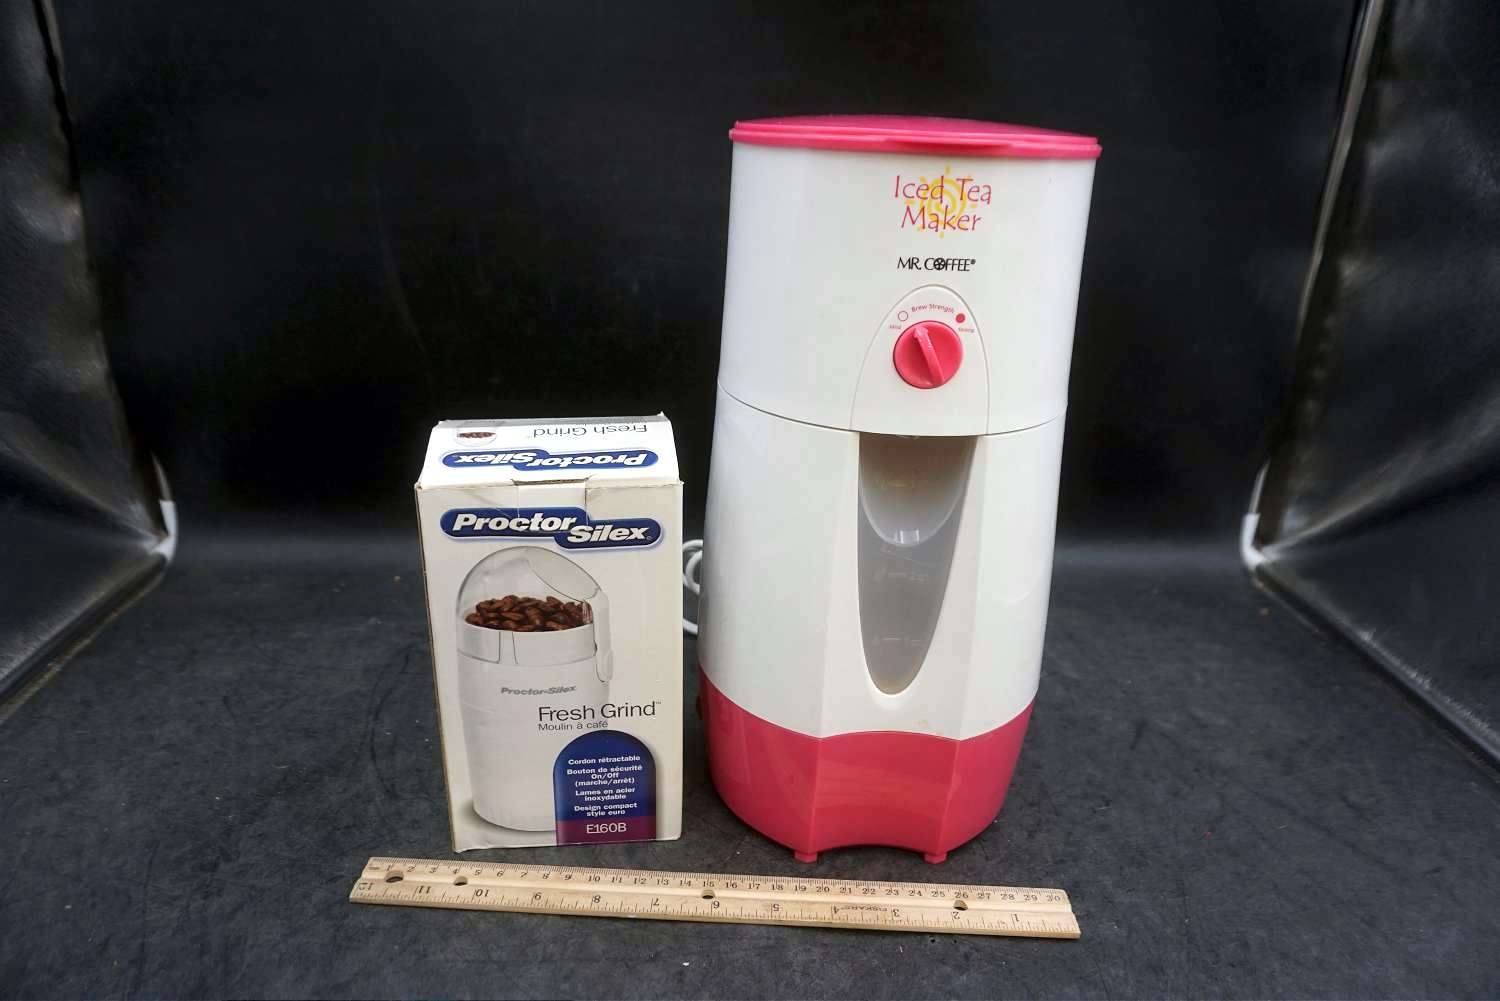 Mr. Coffee Iced Tea Maker & Proctor Silex Coffee